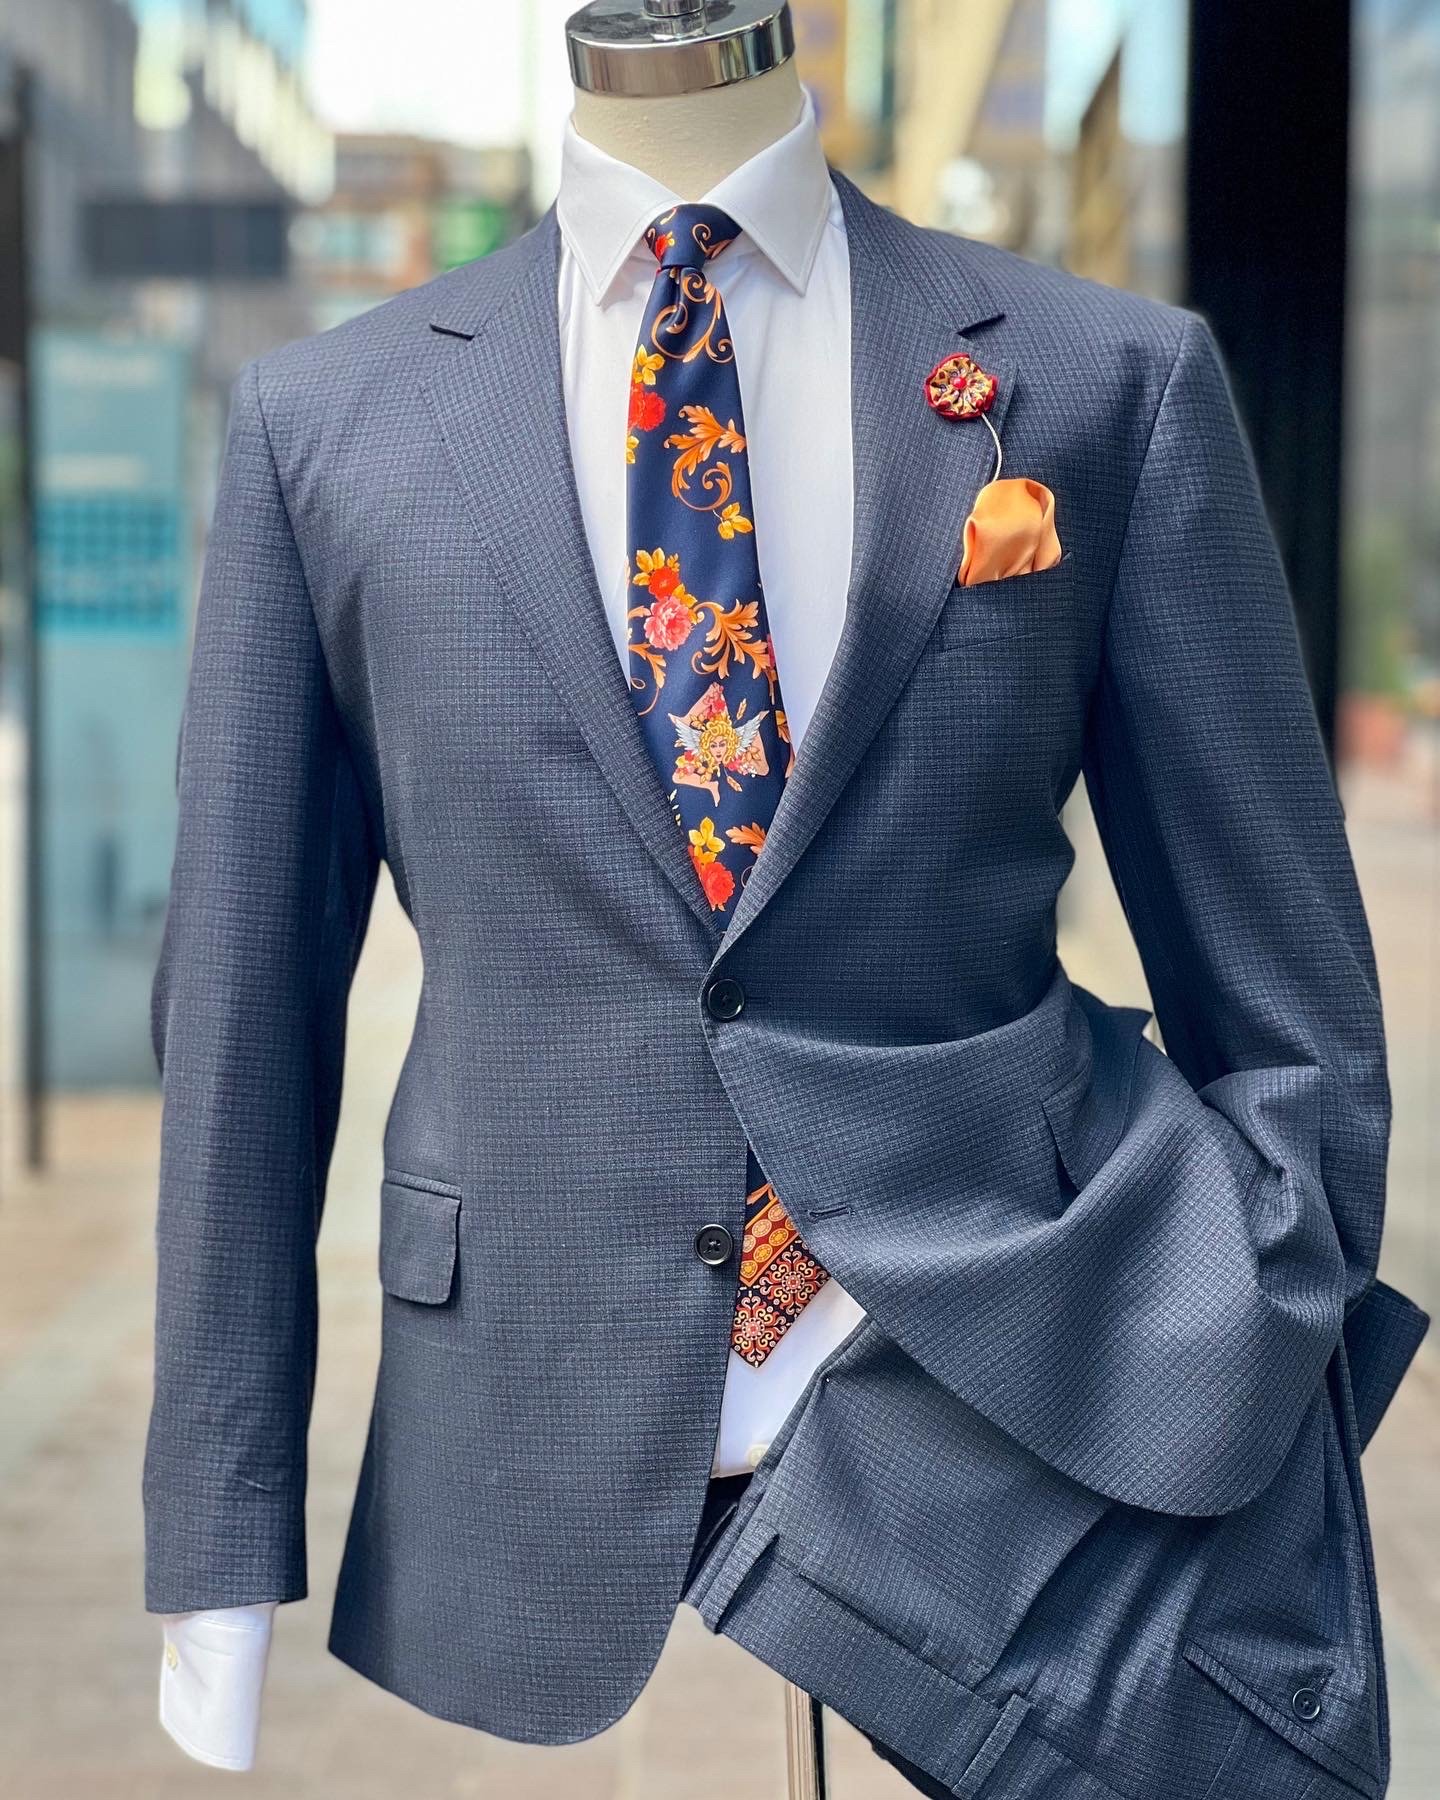 Stylish Men's Custom Designer Suits and Tuxedos in Cincinnati, OH